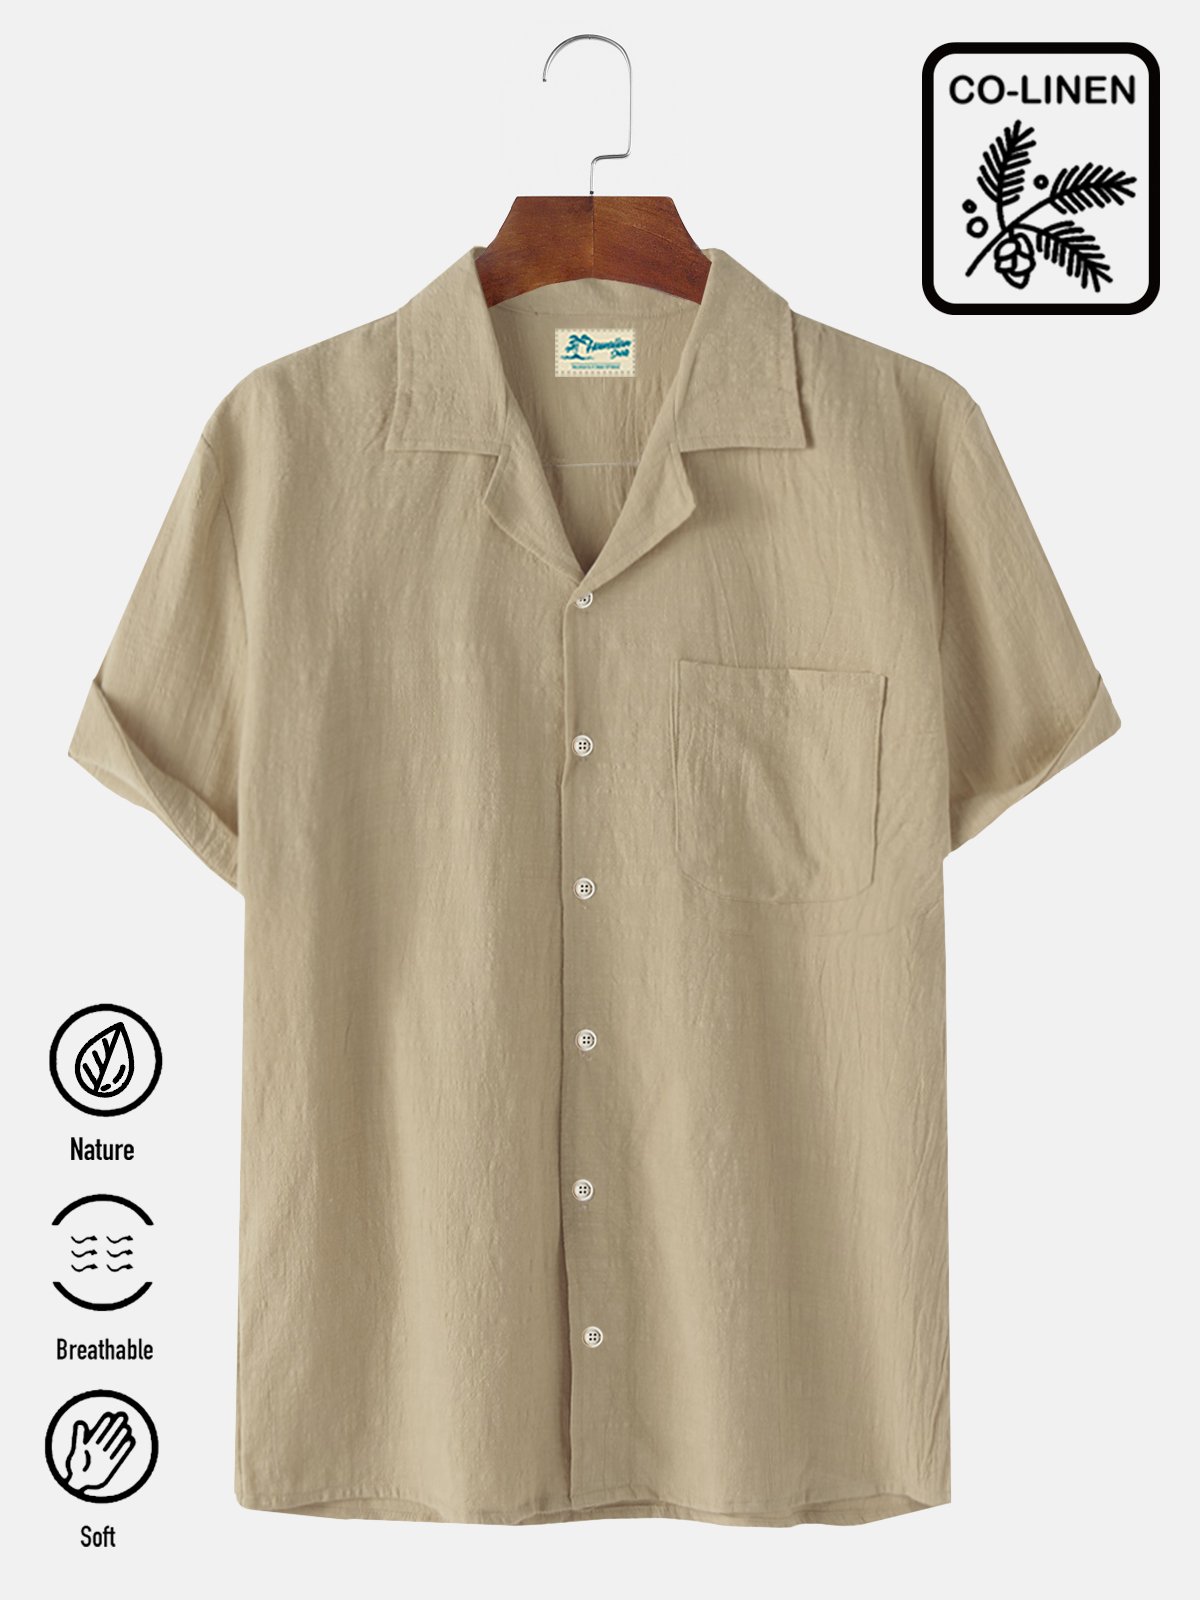 Royaura Solid Color Men's Natural Fiber Blend Camp Shirts Beach Vacation Casual Button Down Camp Shirts